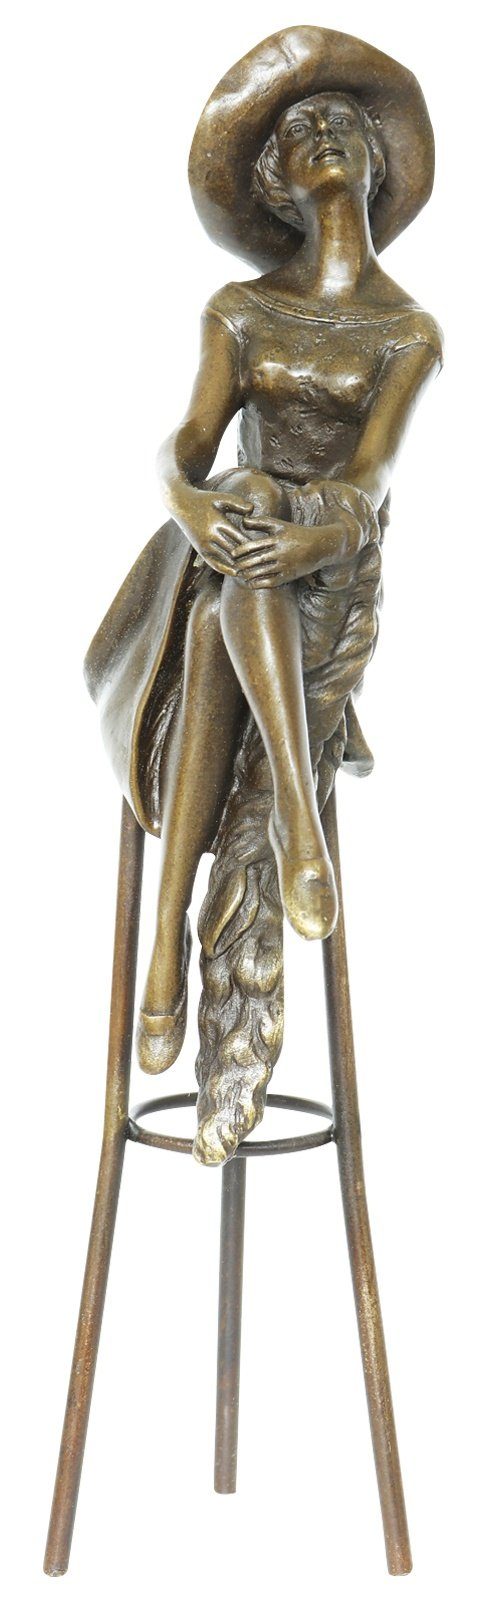 Aubaho Skulptur Bronzeskulptur Bronze Figur Frau auf Barhocker nach Chiparus Antik-Sti